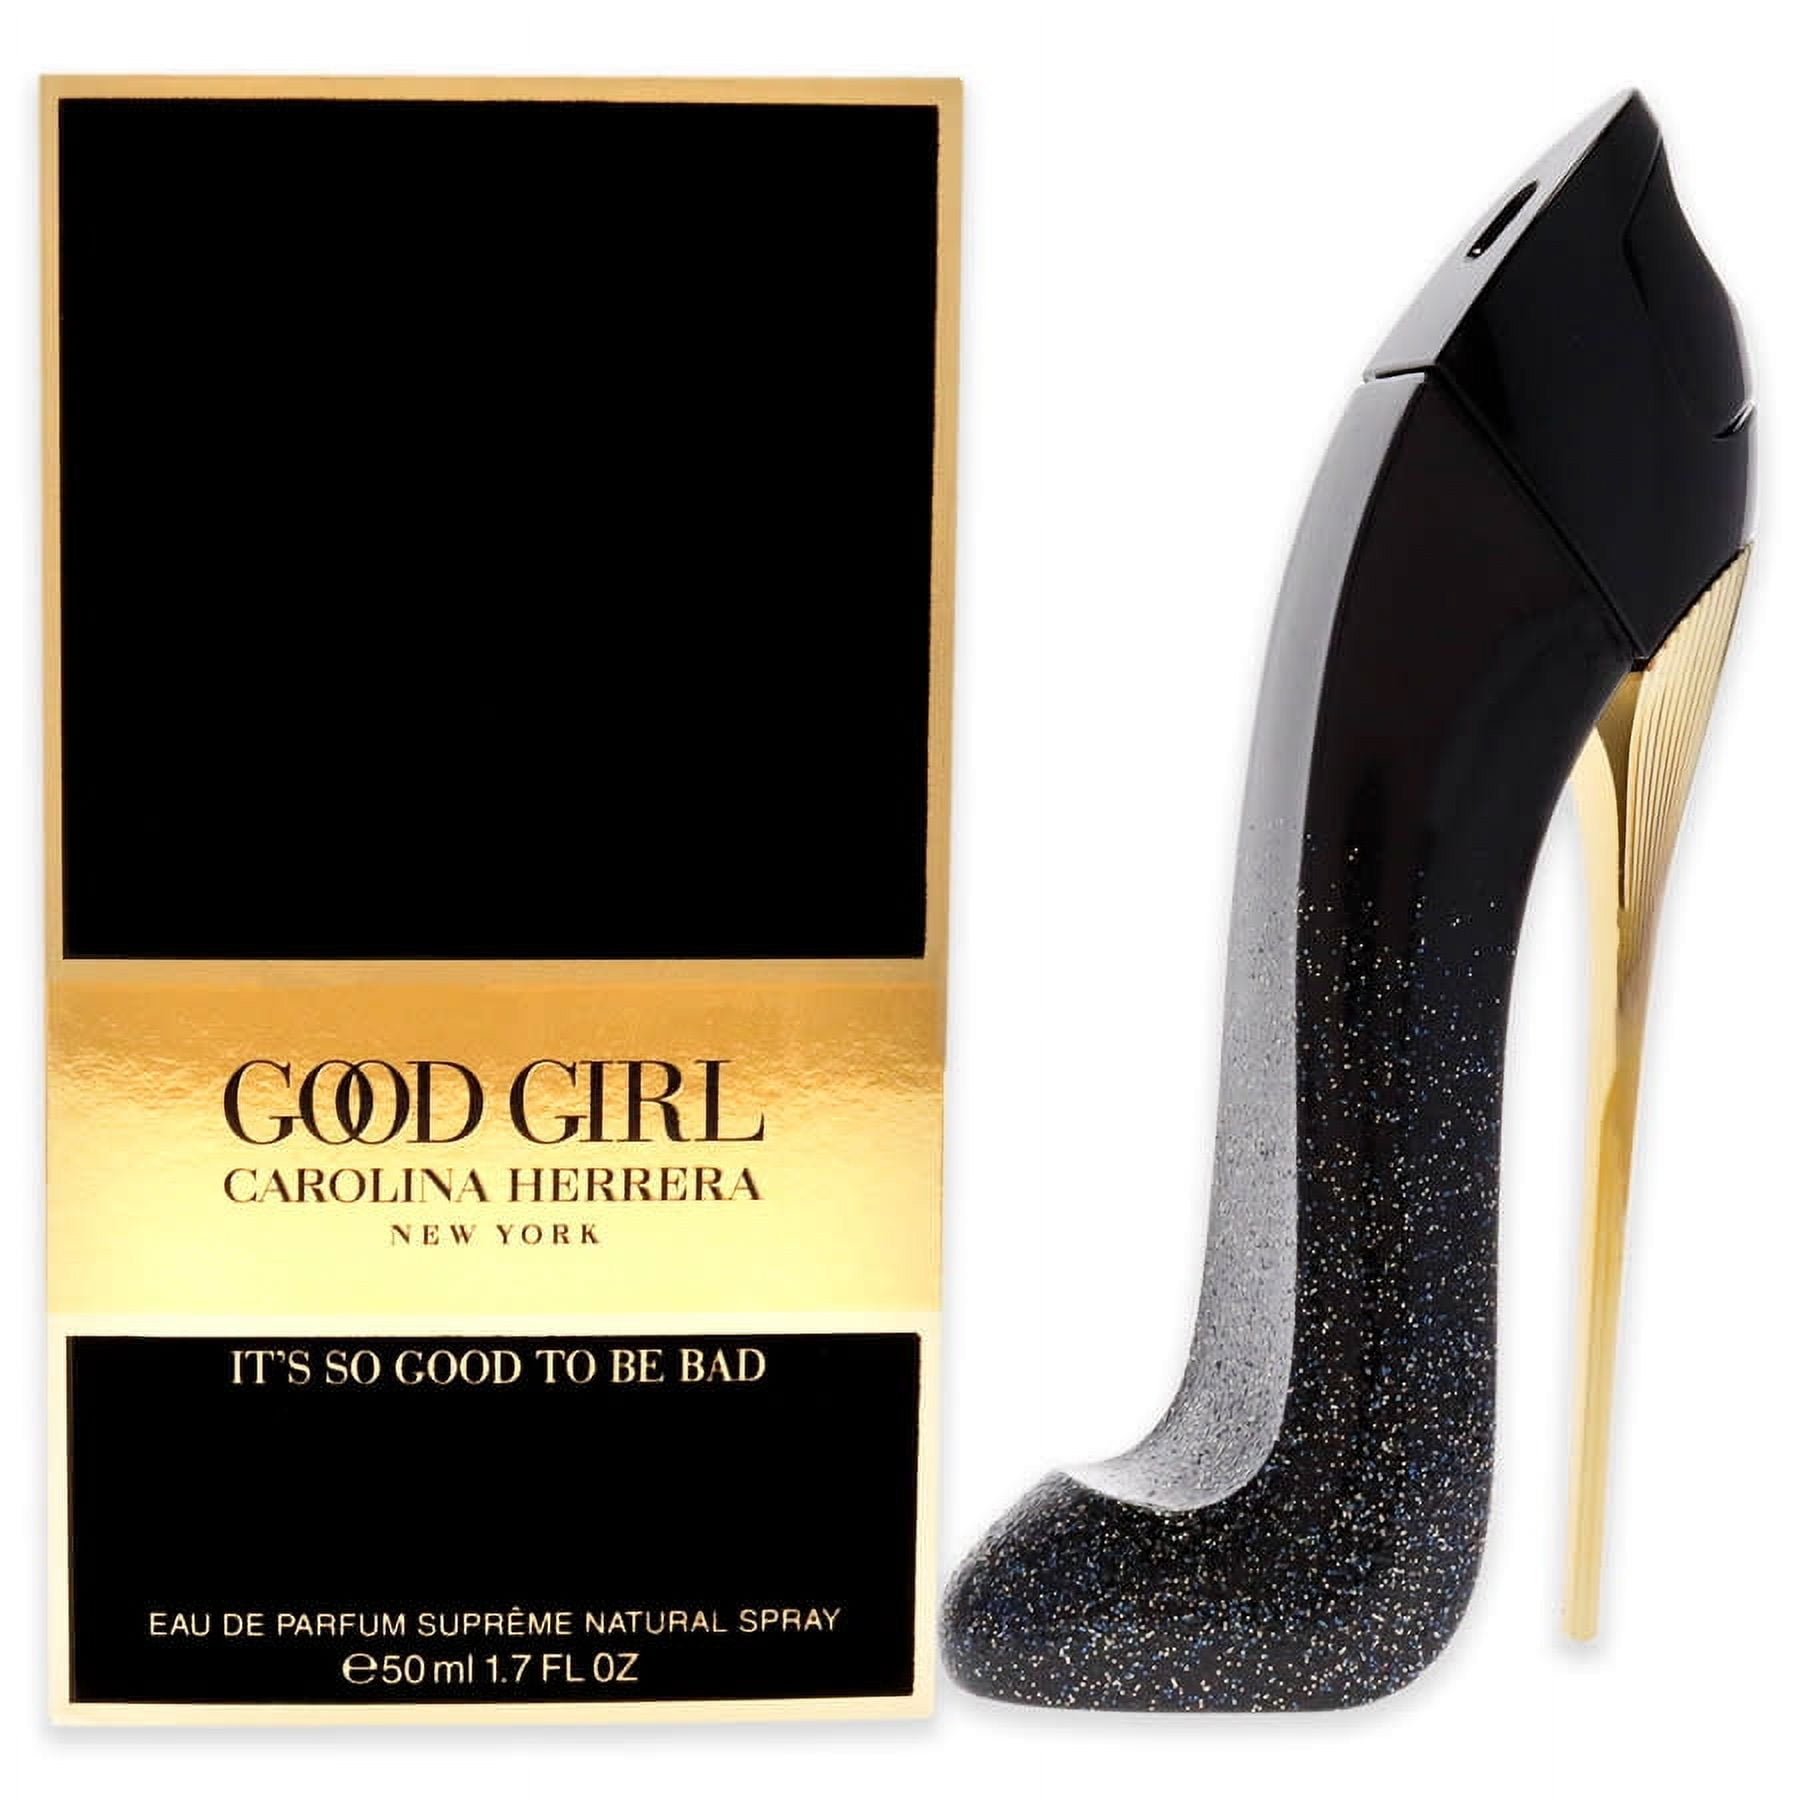 Carolina Herrera Good Girl Supreme Eau De Parfum for Women - 1 oz - Spray